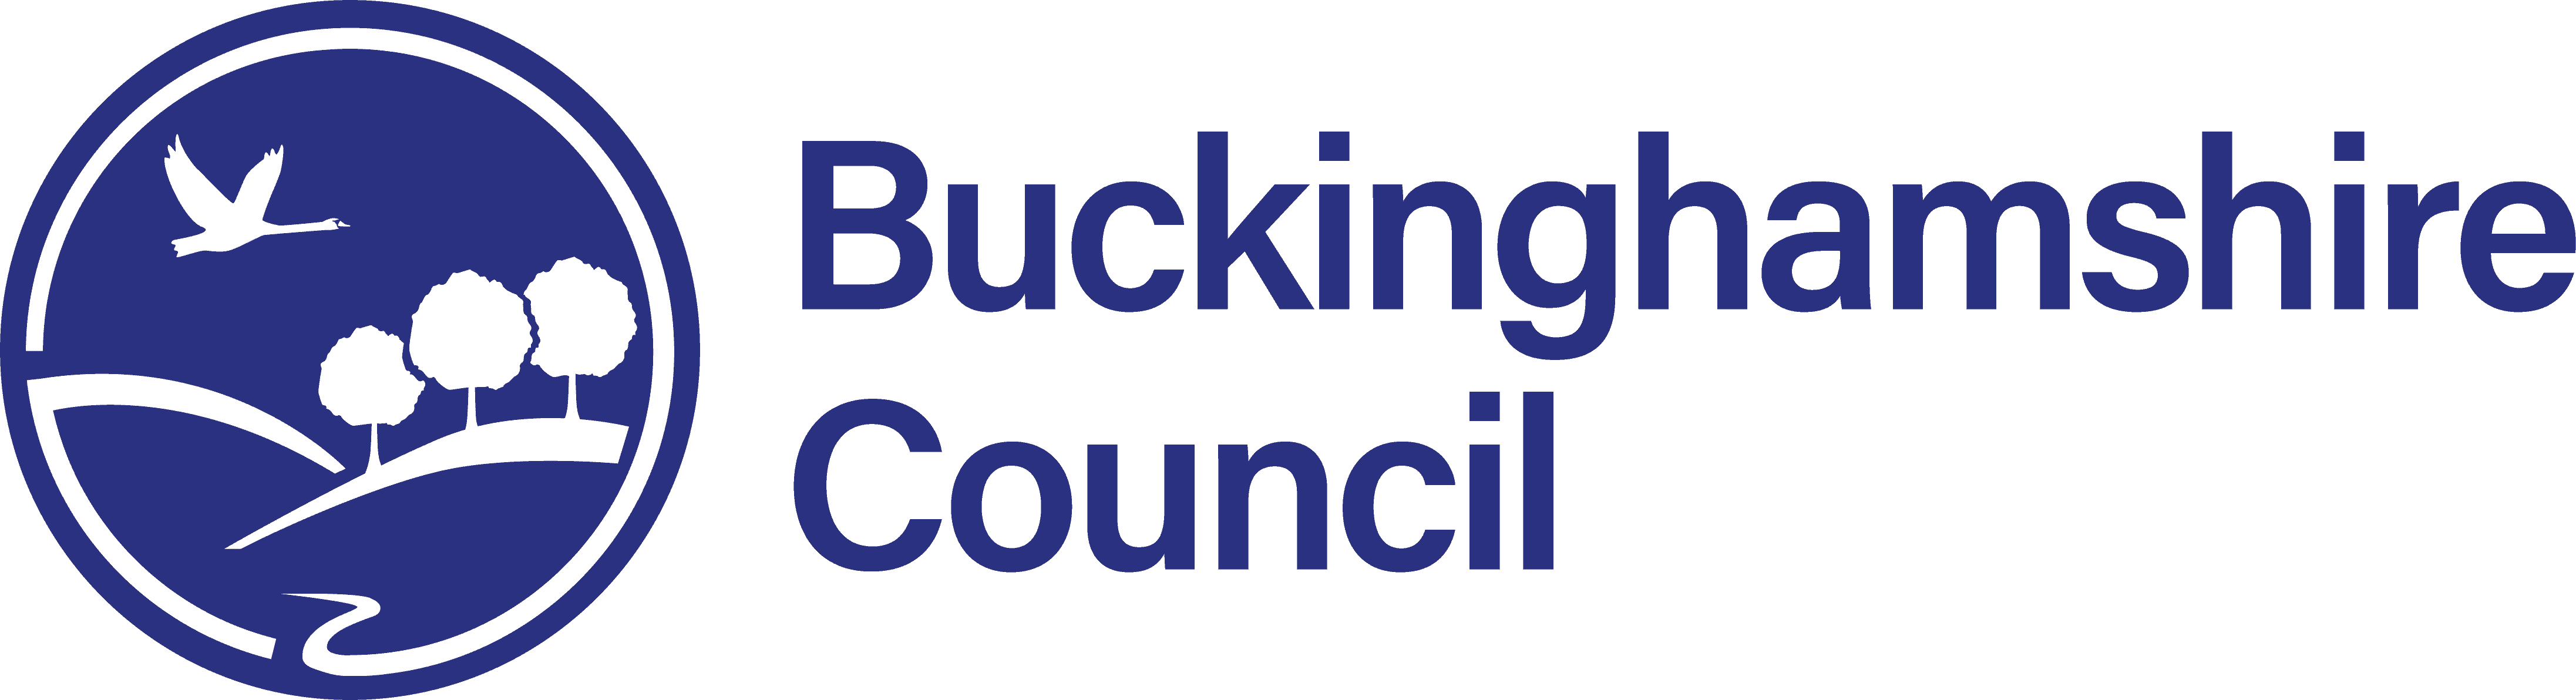 https://ef7reu2nmnd.exactdn.com/wp-content/uploads/2021/09/Buckinghamshire-Council-Blue-landscape-version.png?strip=all&lossy=0&ssl=1